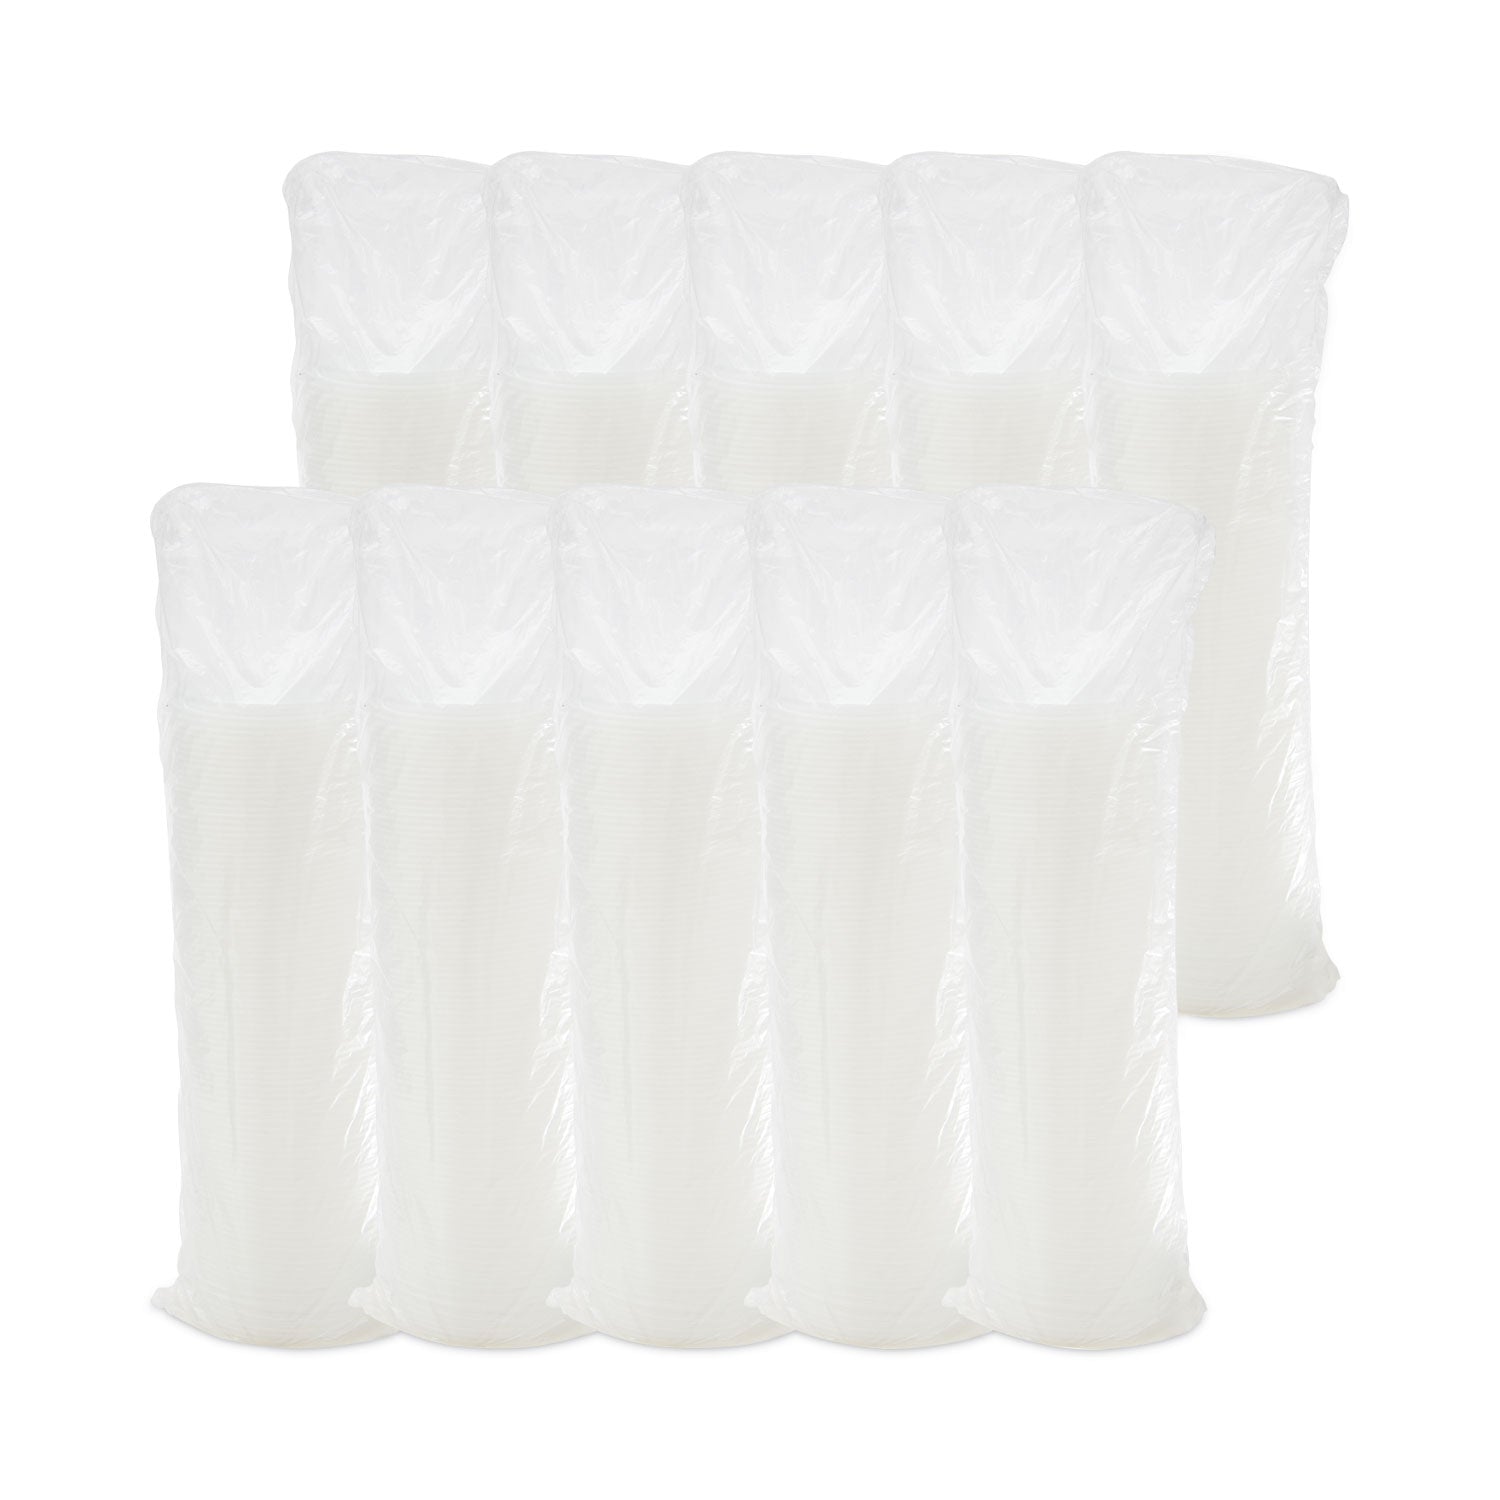 Lift n' Lock Plastic Hot Cup Lids, Fits 12 oz to 24 oz Cups, Translucent, 1,000/Carton - 